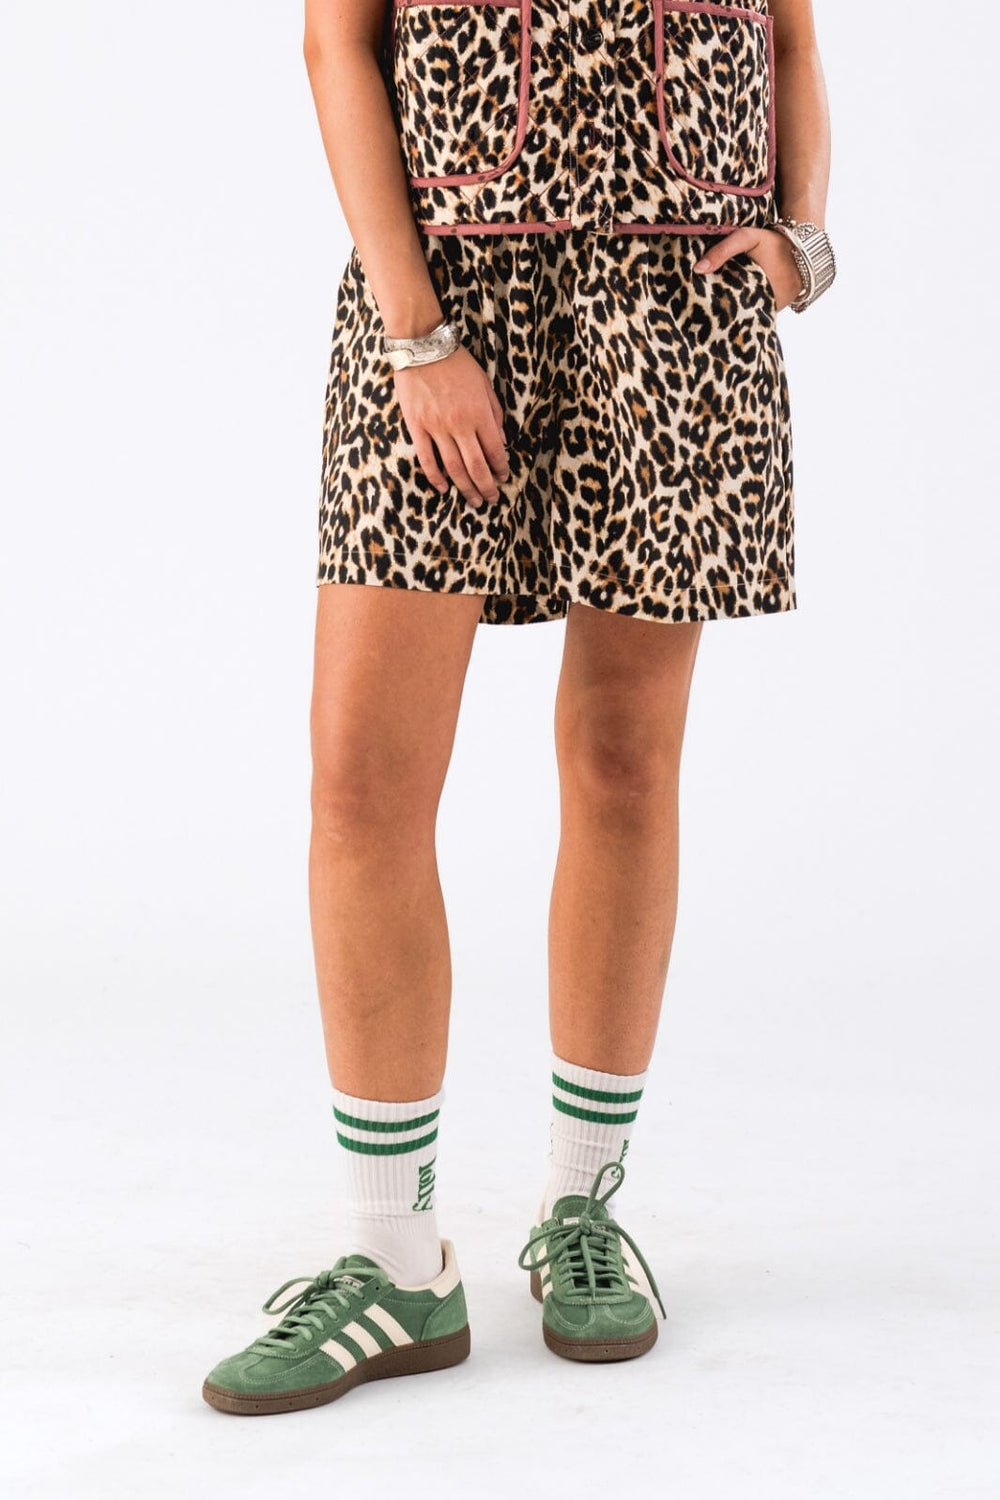 Lollys Laundry - Blancall Shorts - 72 Leopard Print Shorts 